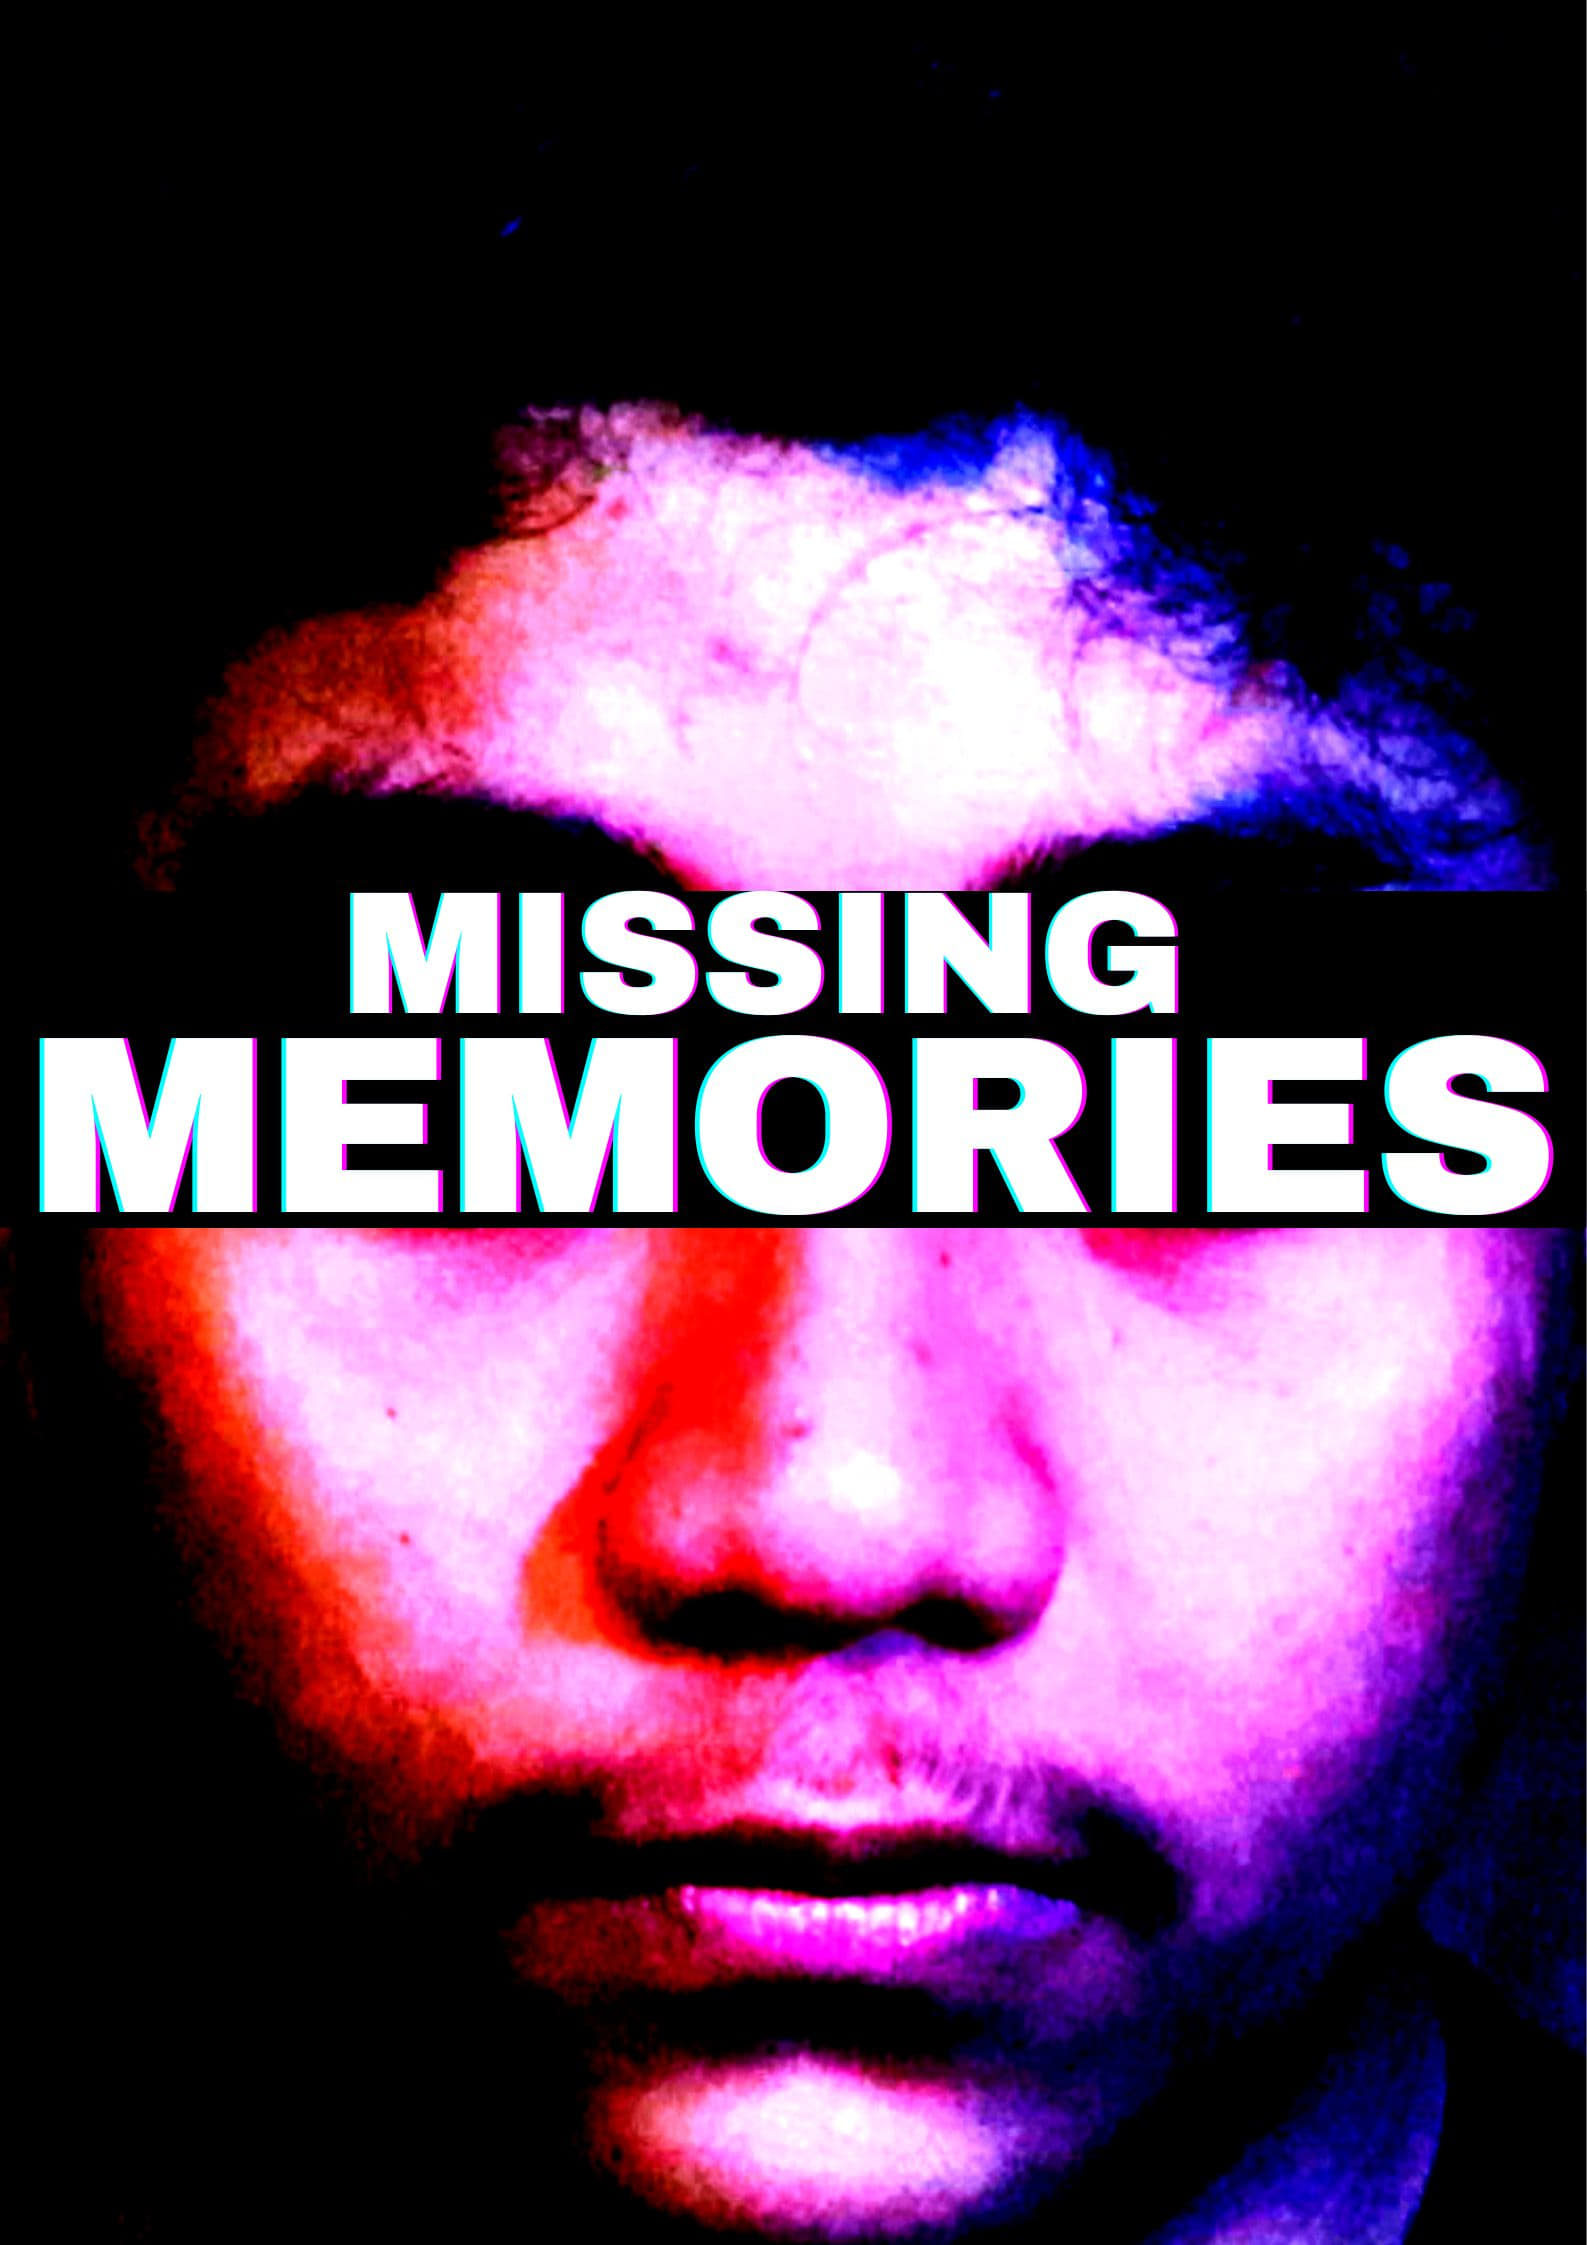 Missing Memories